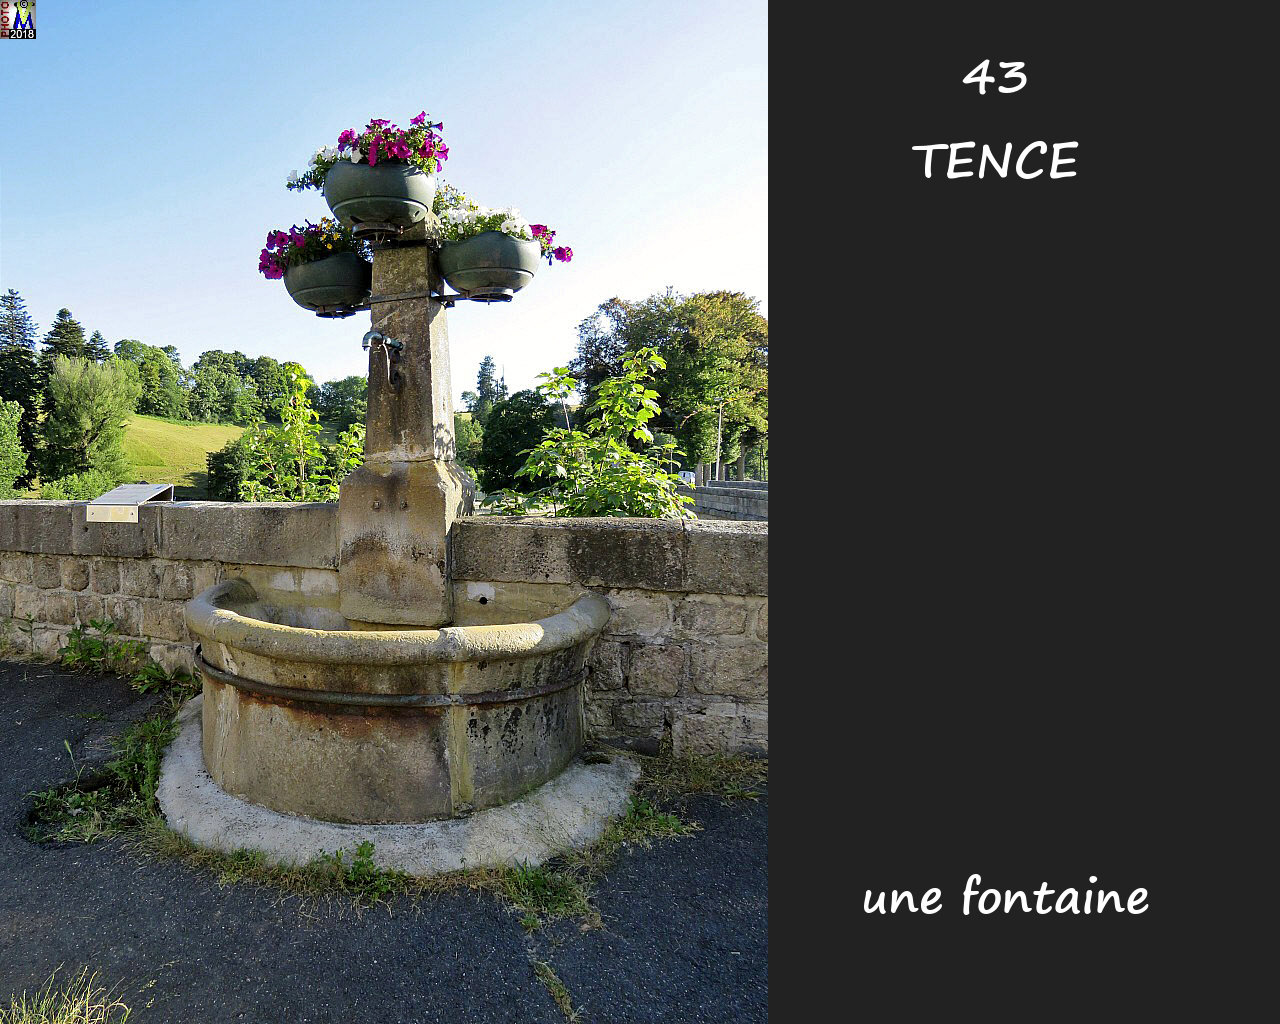 43TENCE_fontaine_110.jpg